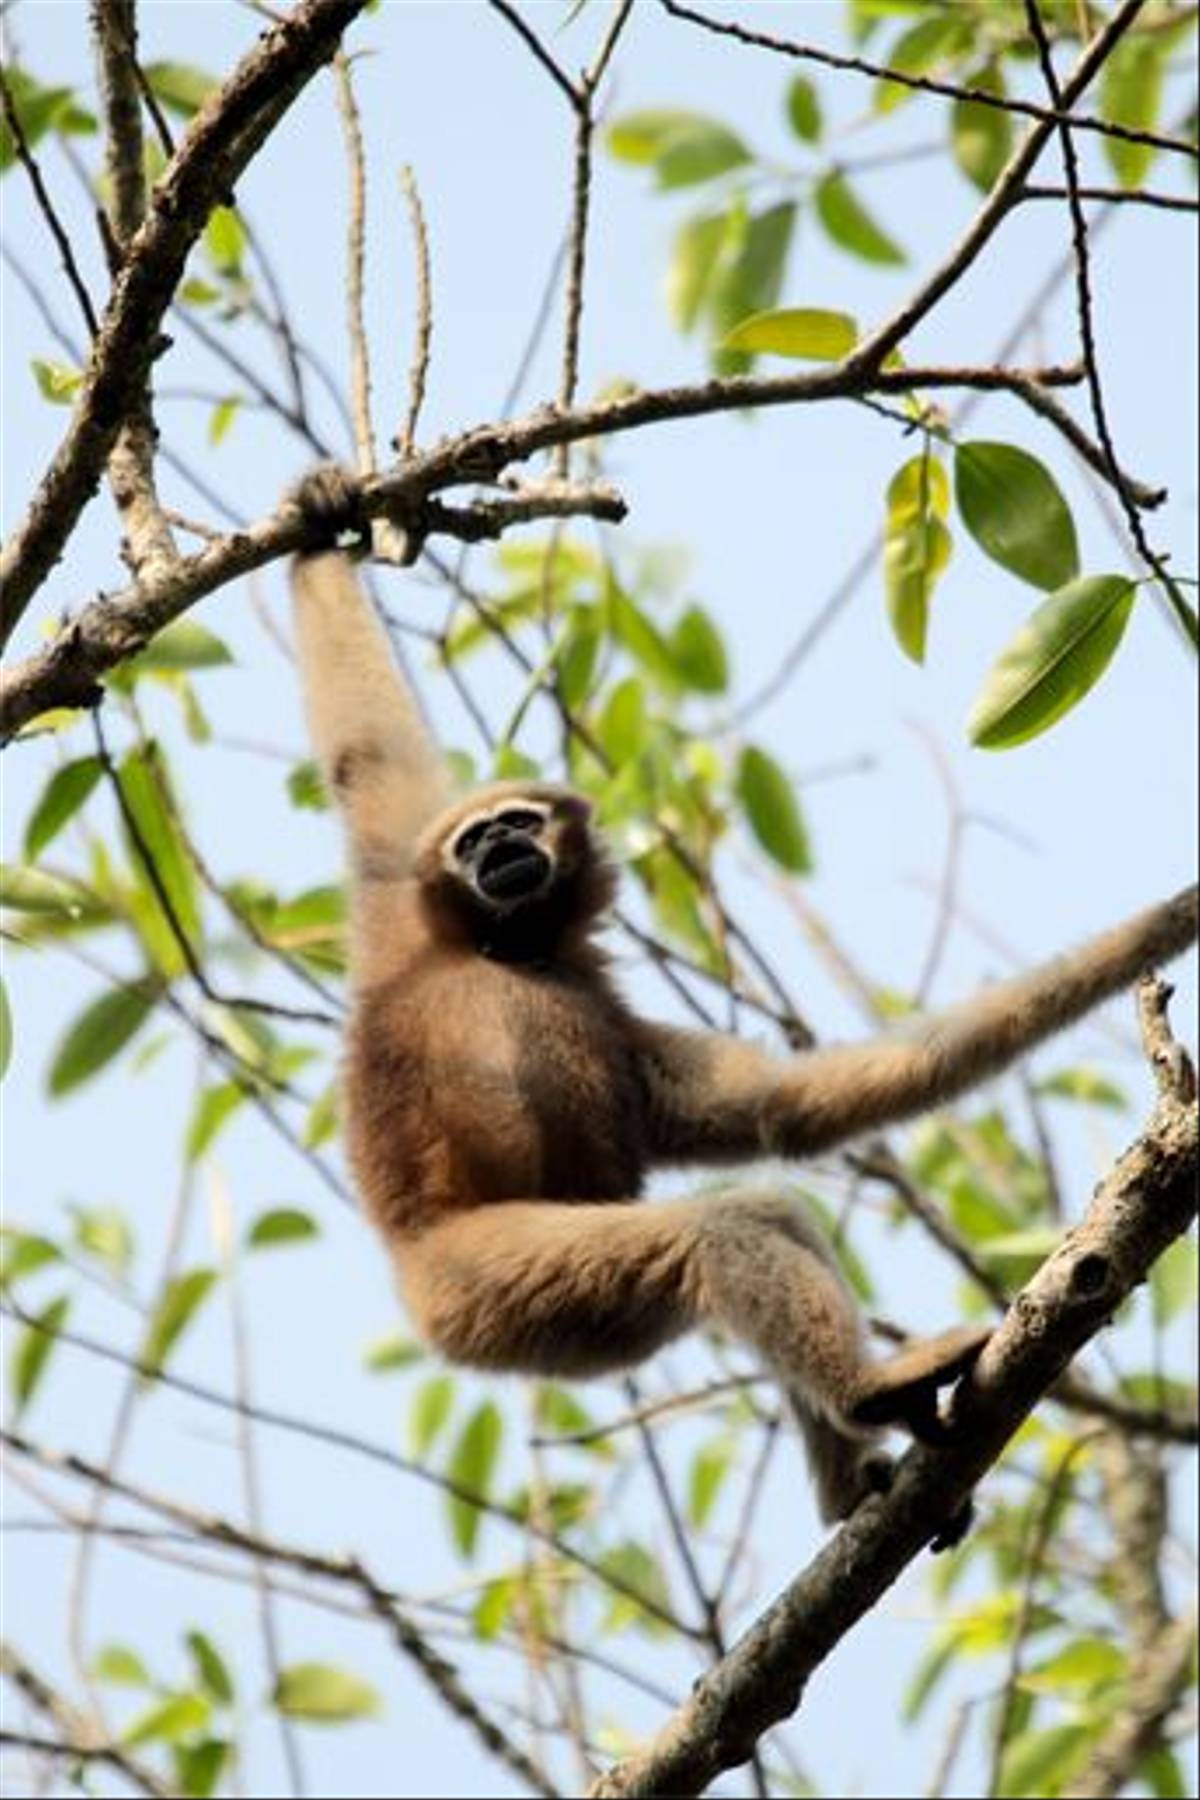 Female Hoolock Gibbon (Bret Charman)